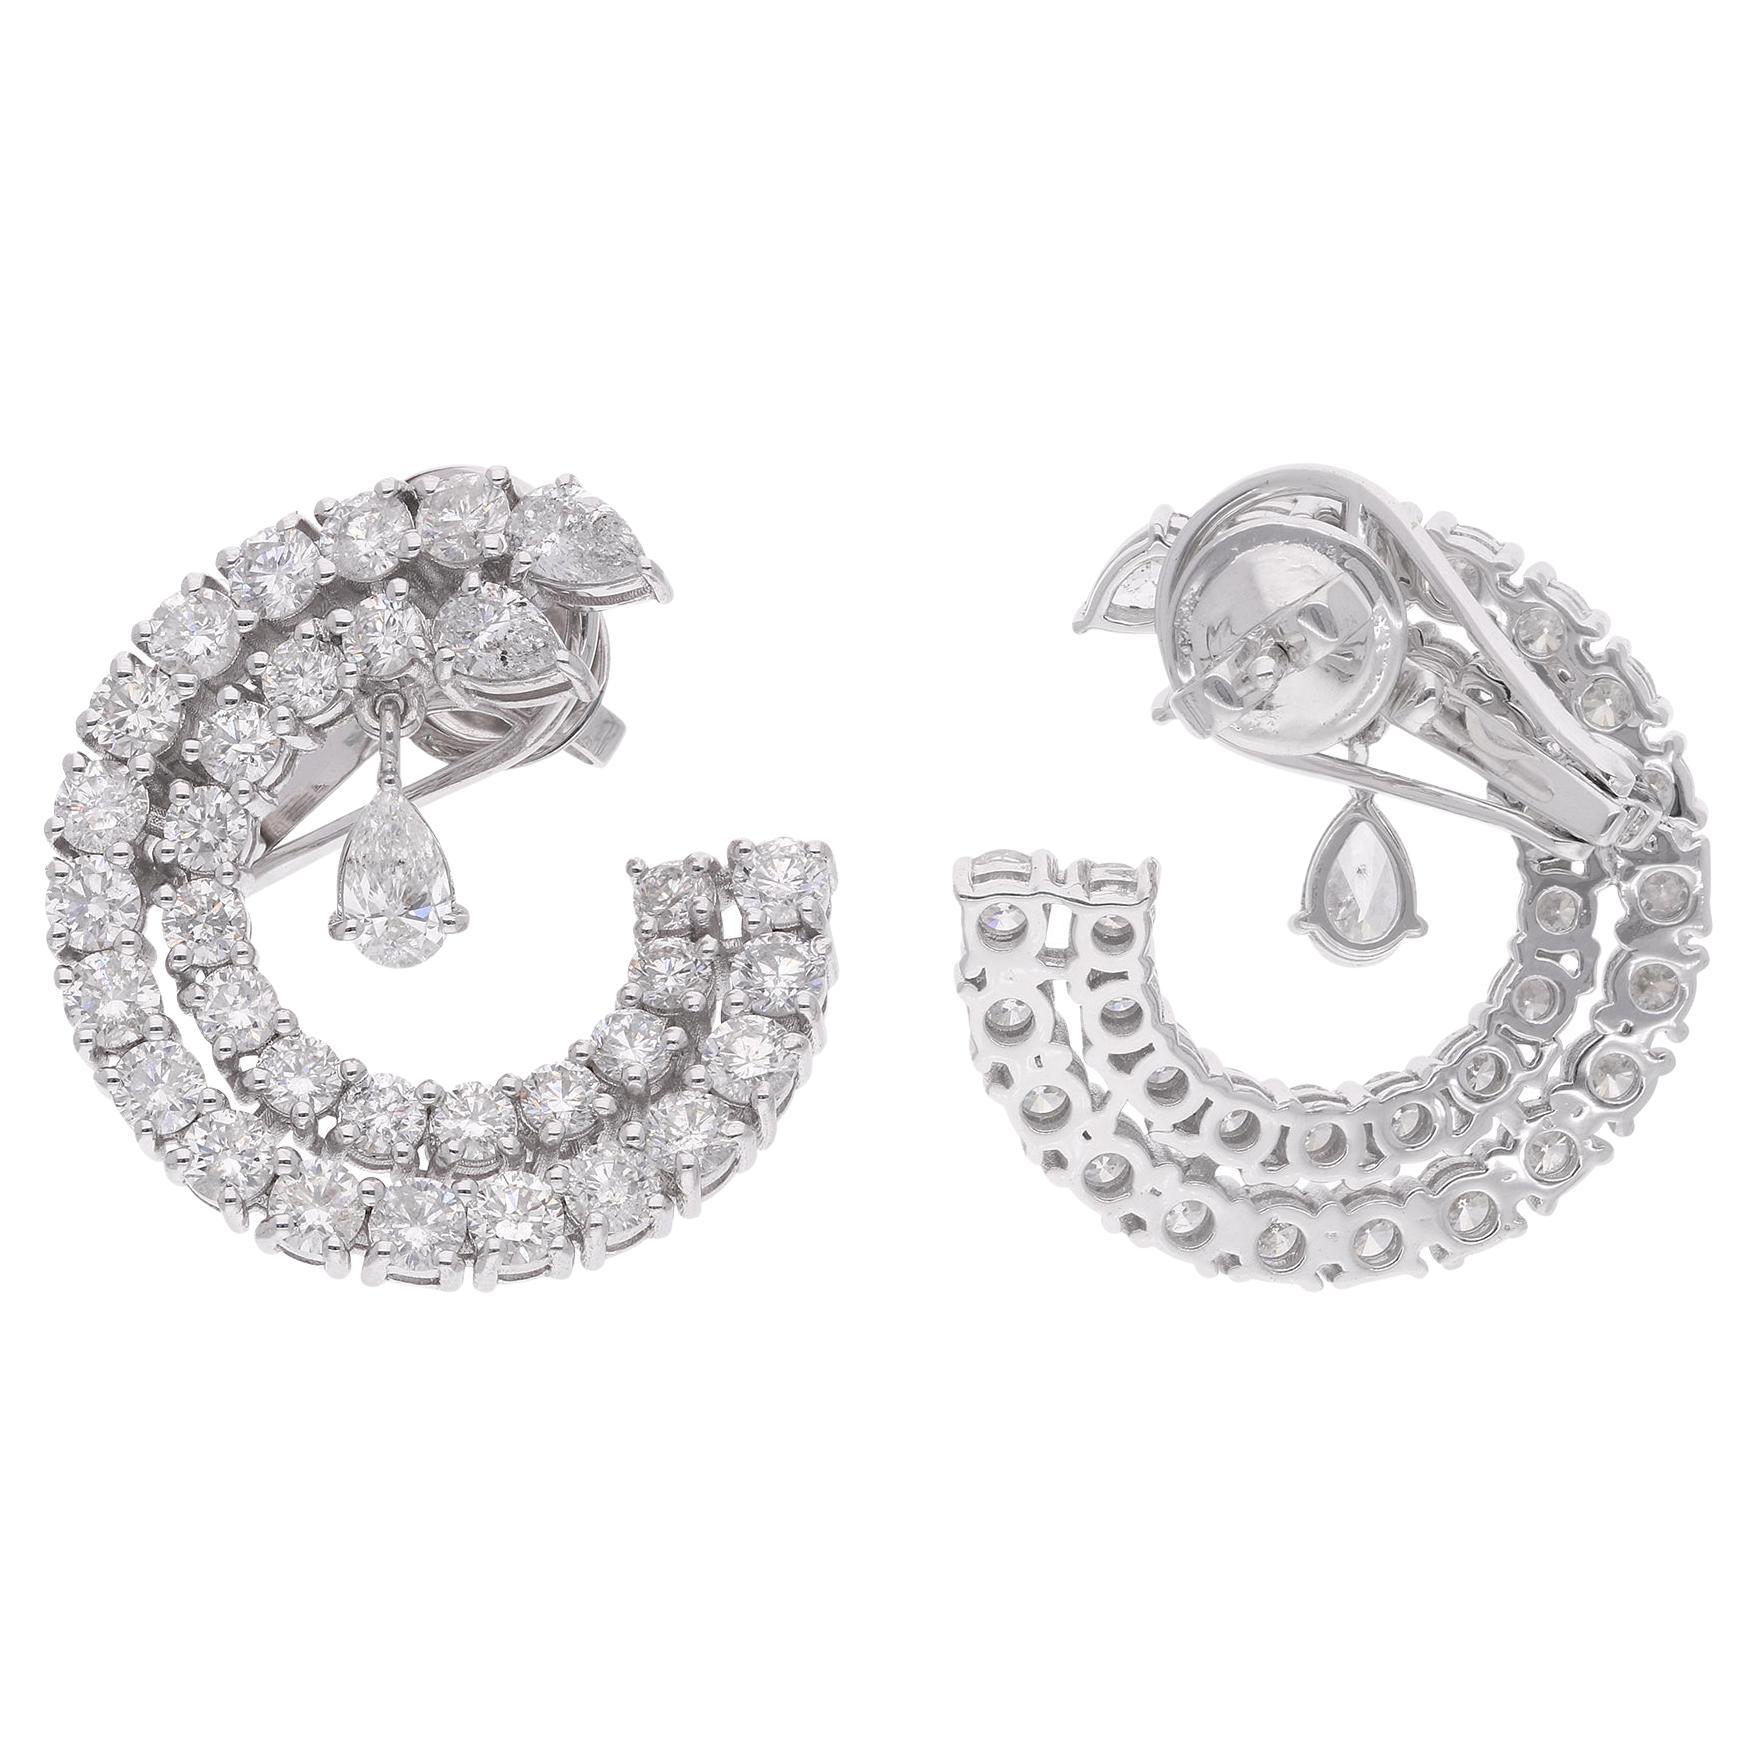 Real 5 Carat Pear & Round Diamond Earrings 14 Karat White Gold Handmade Jewelry